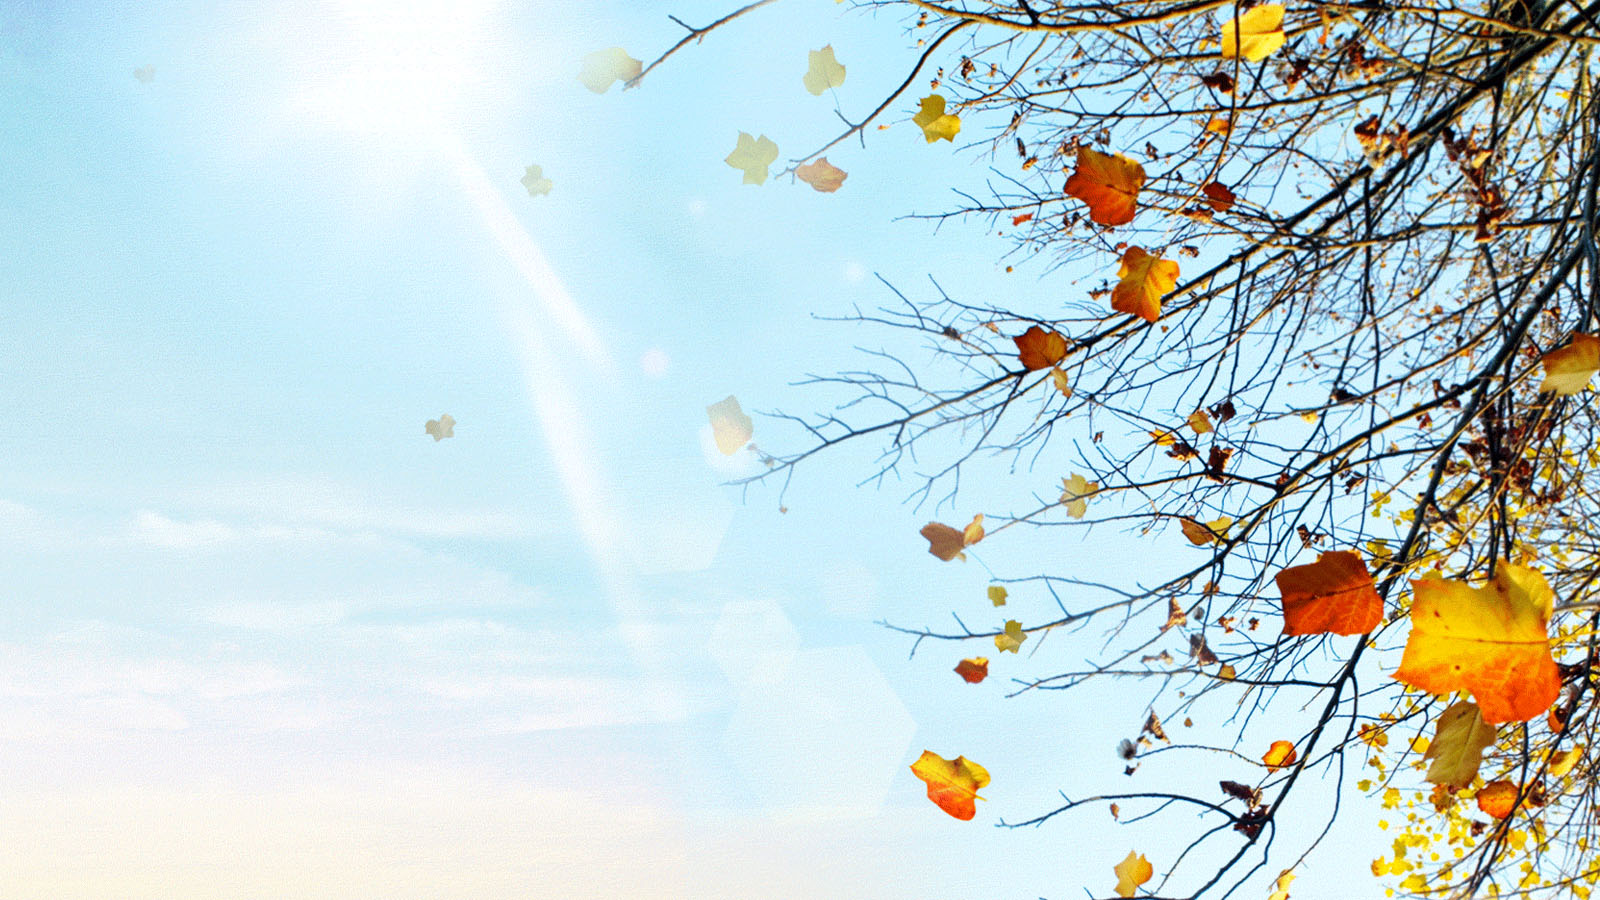 Falling leaves desktop background picture